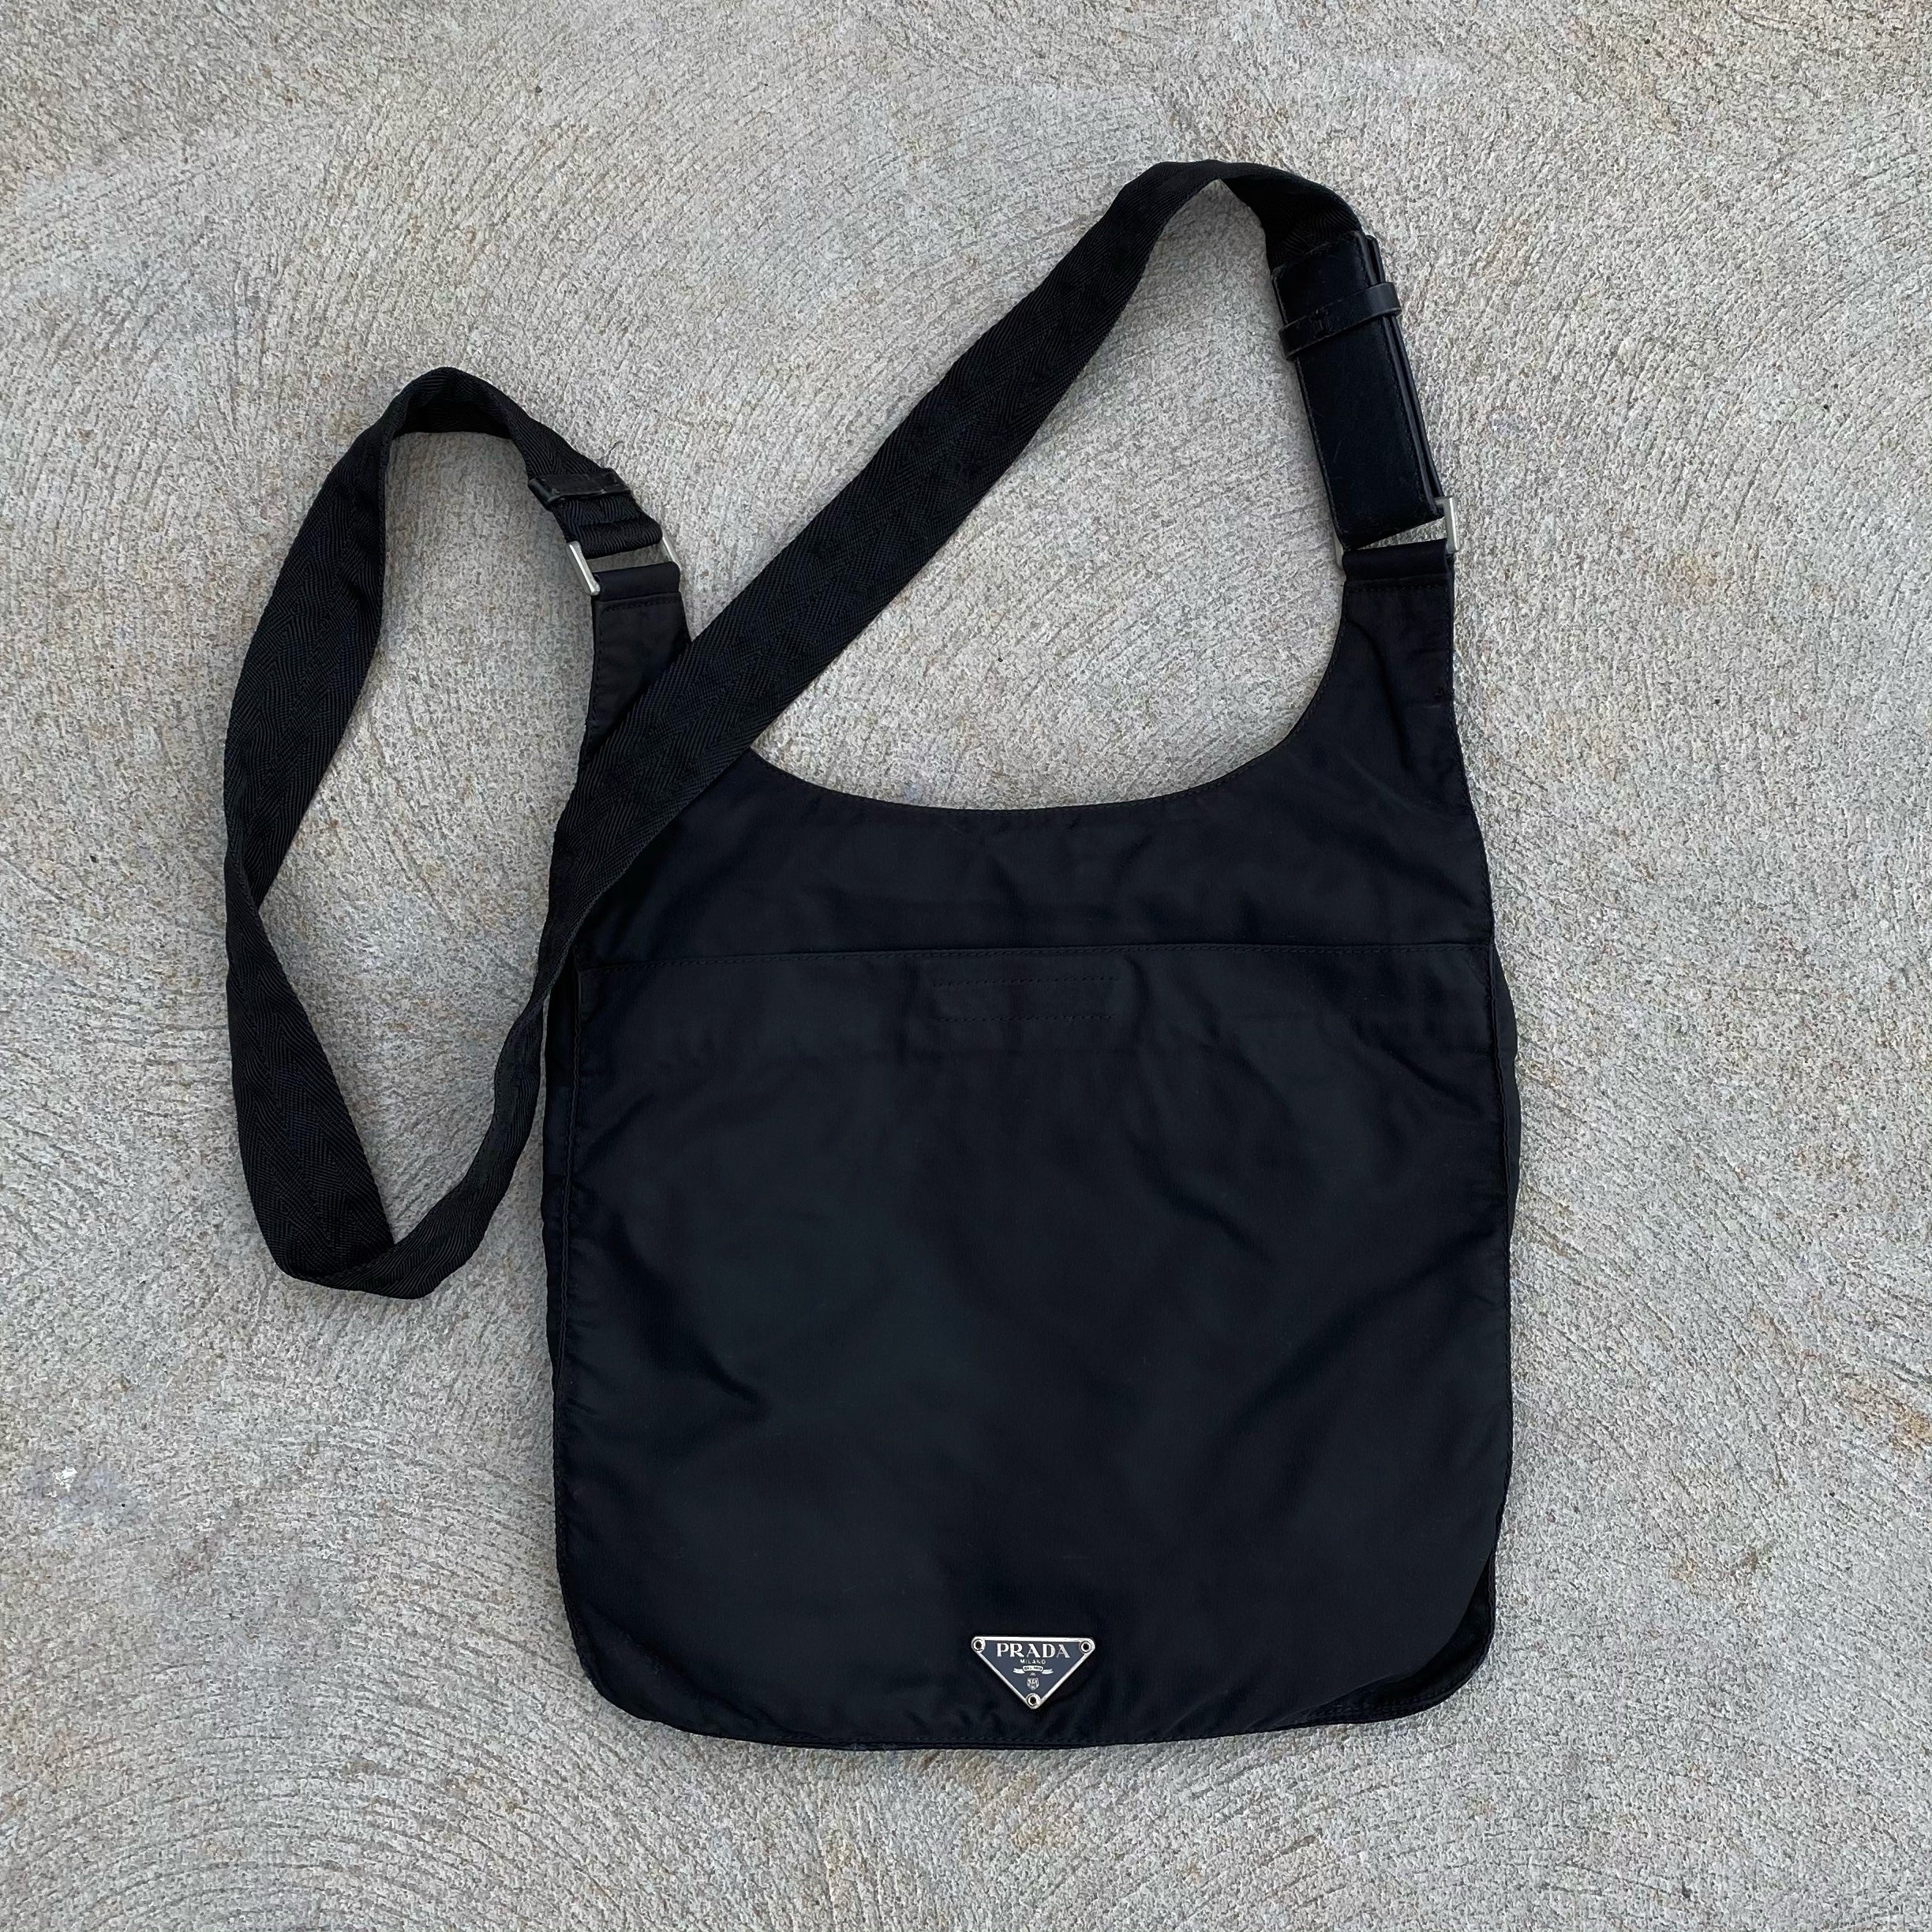 Prada Nylon Black Large Side Bag